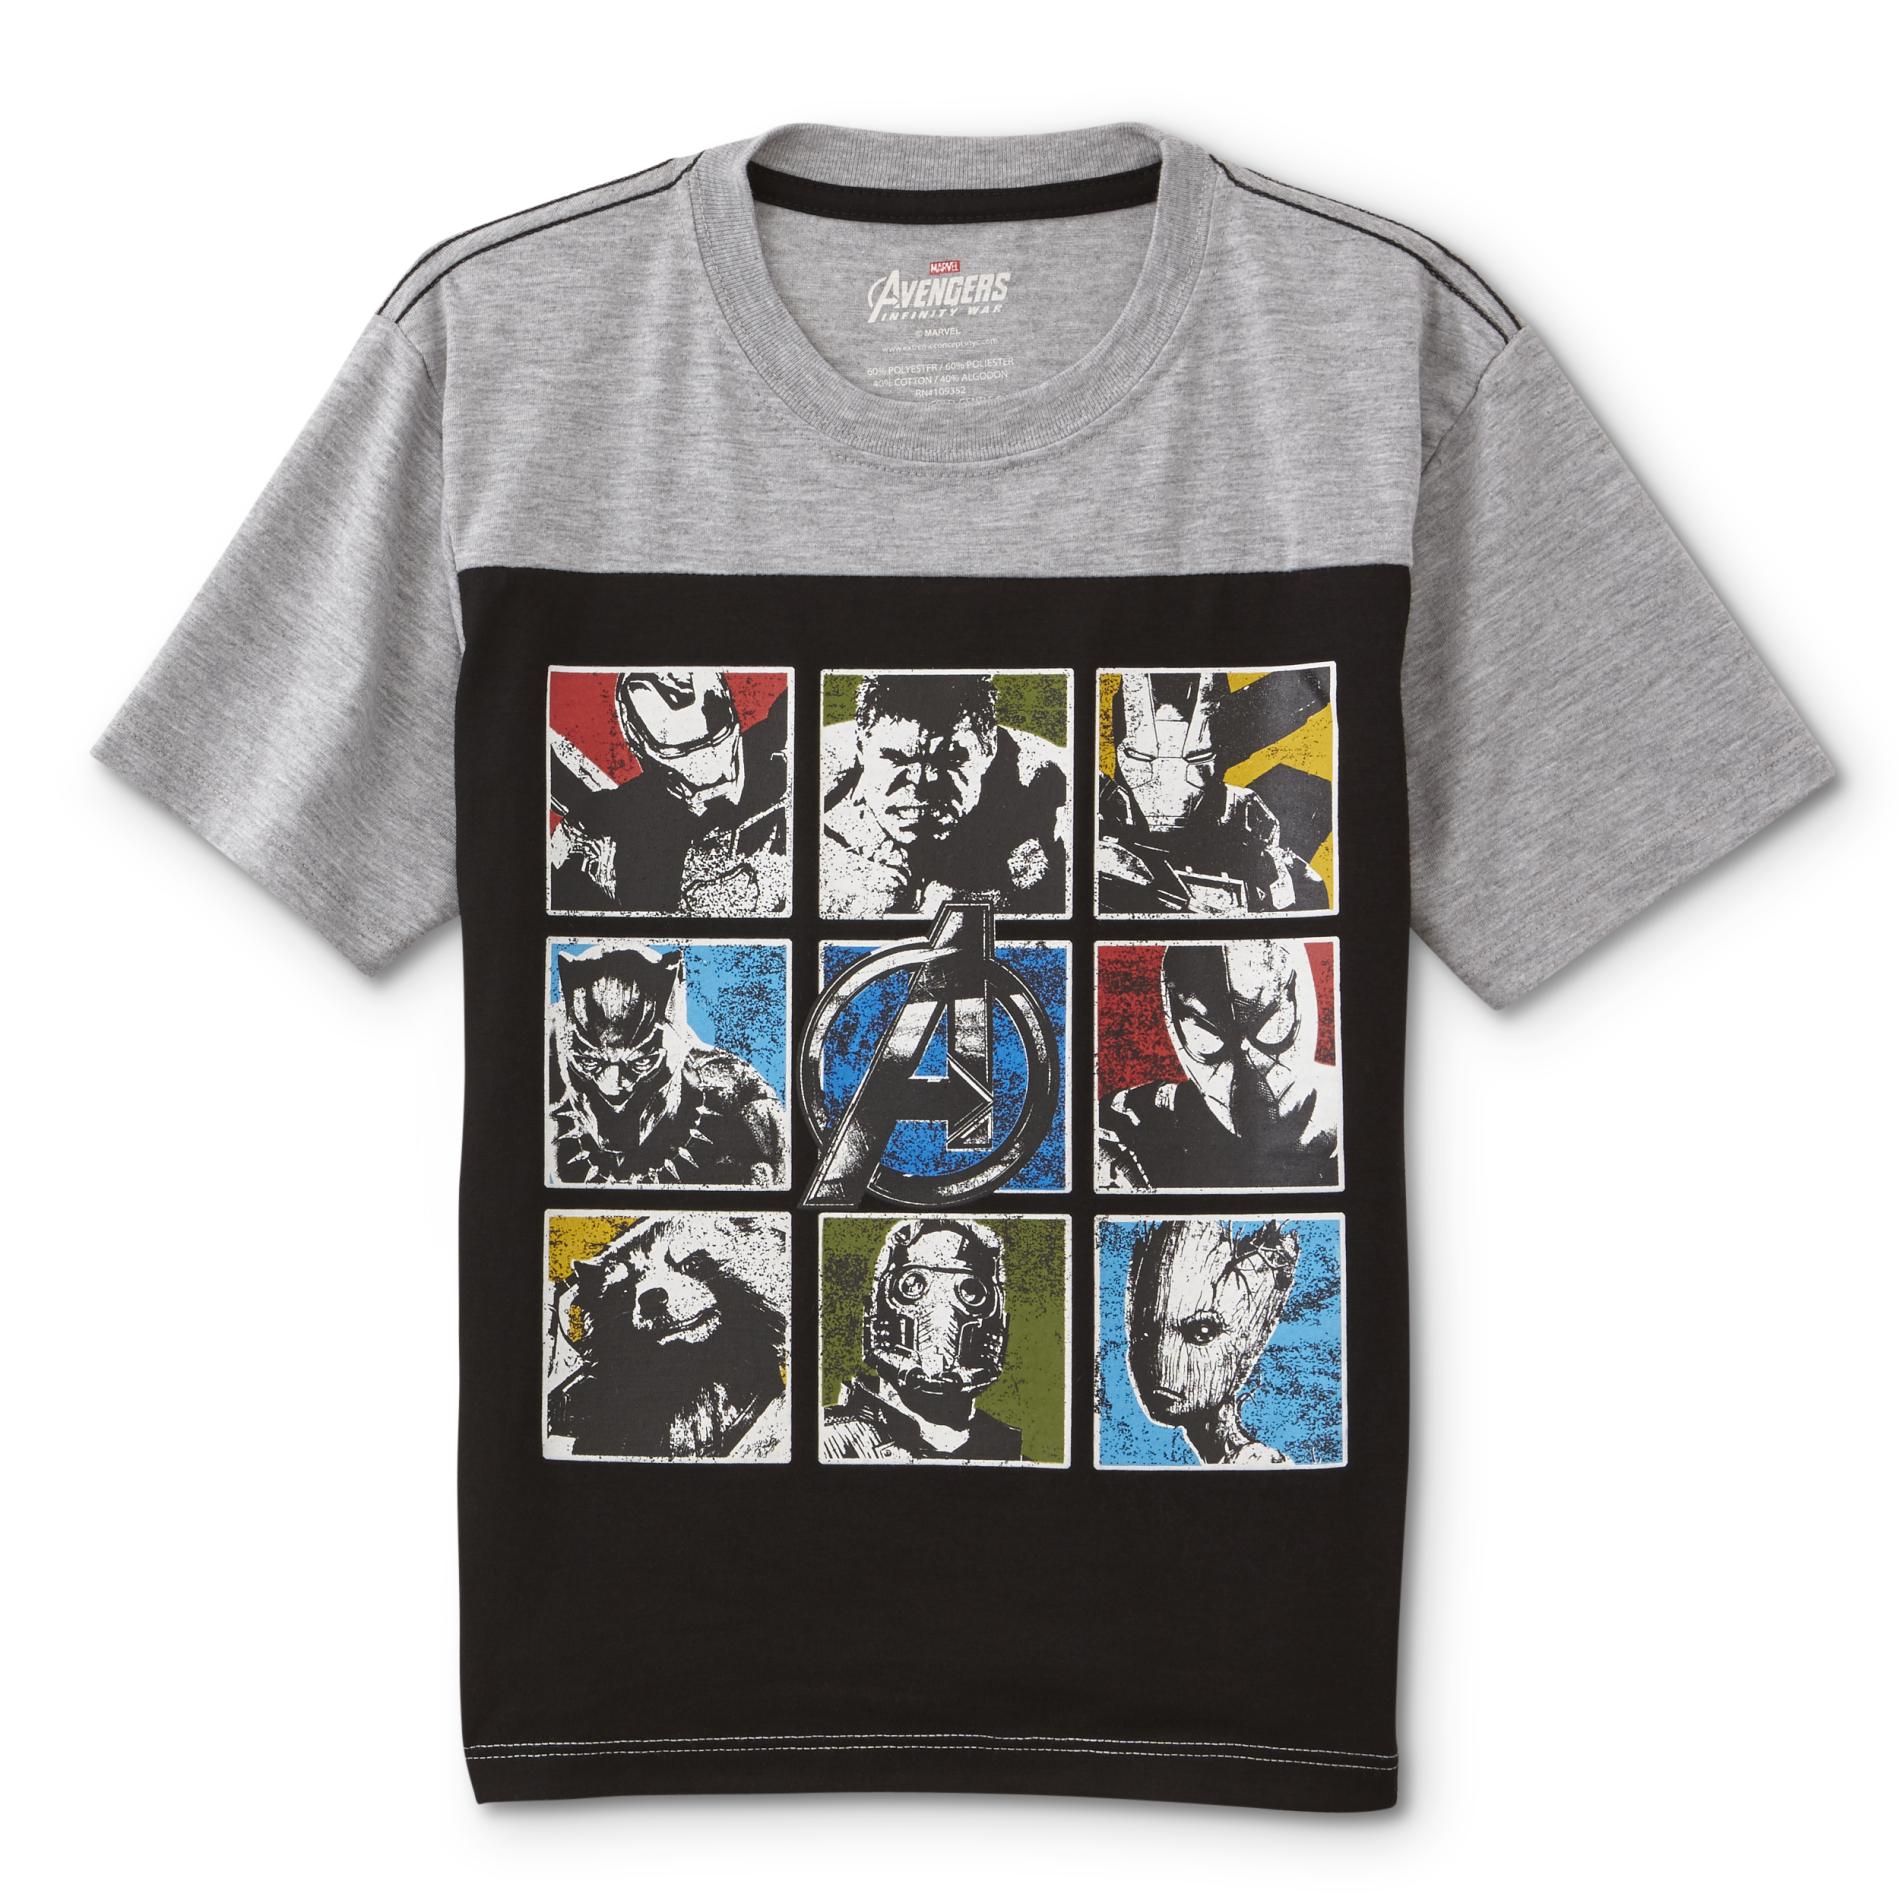 Avengers Boys' Graphic T-Shirt